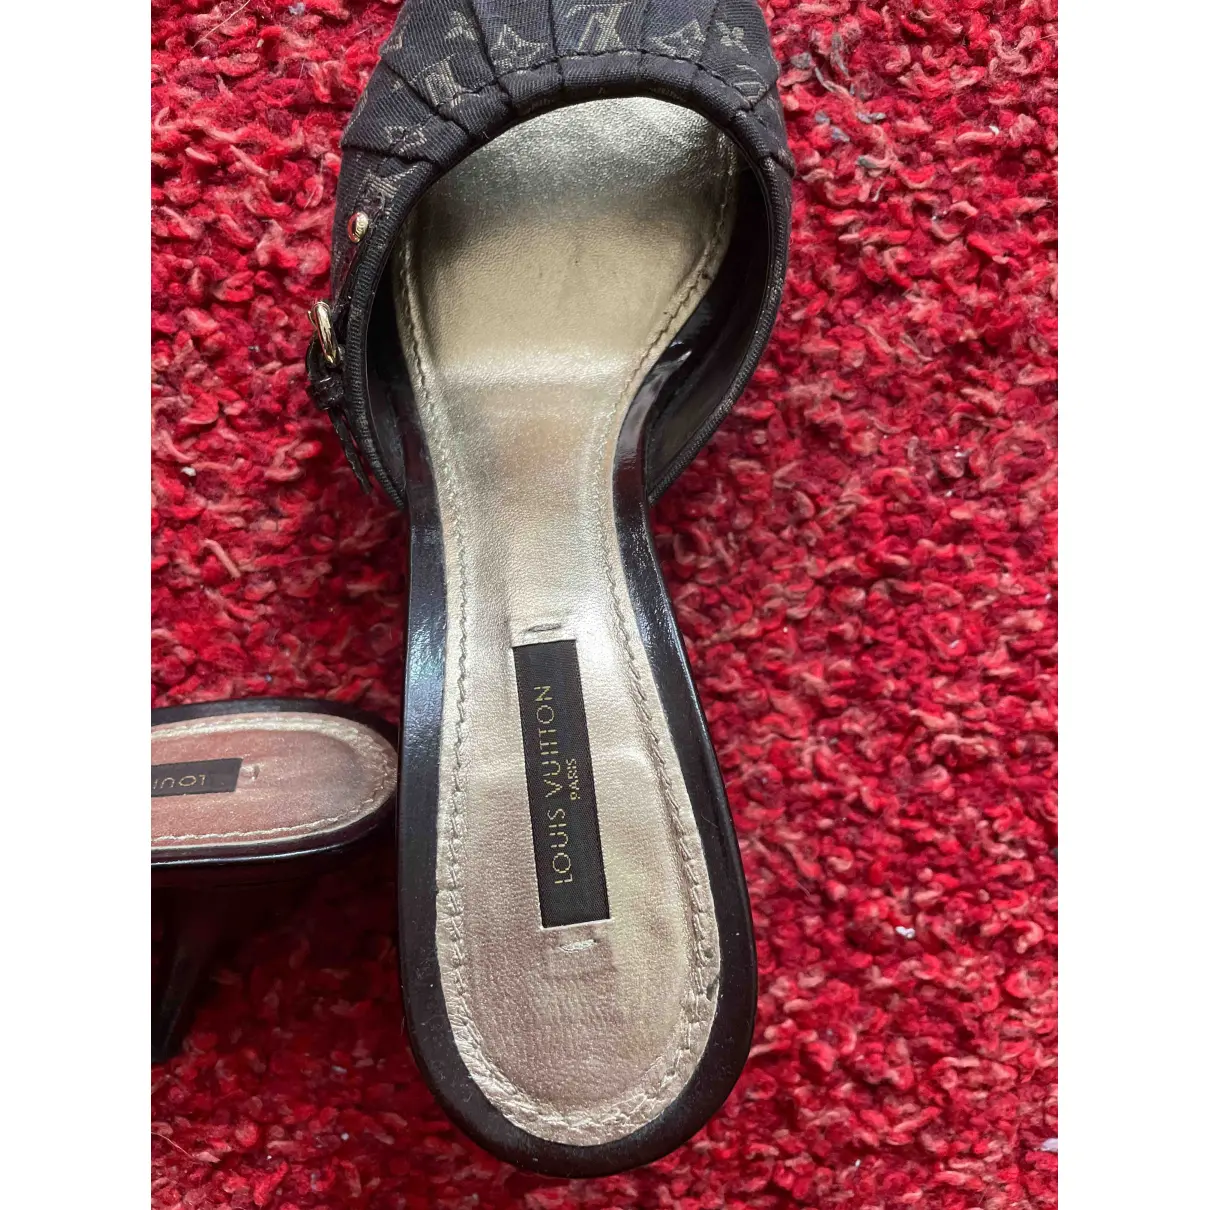 Cherie leather heels Louis Vuitton